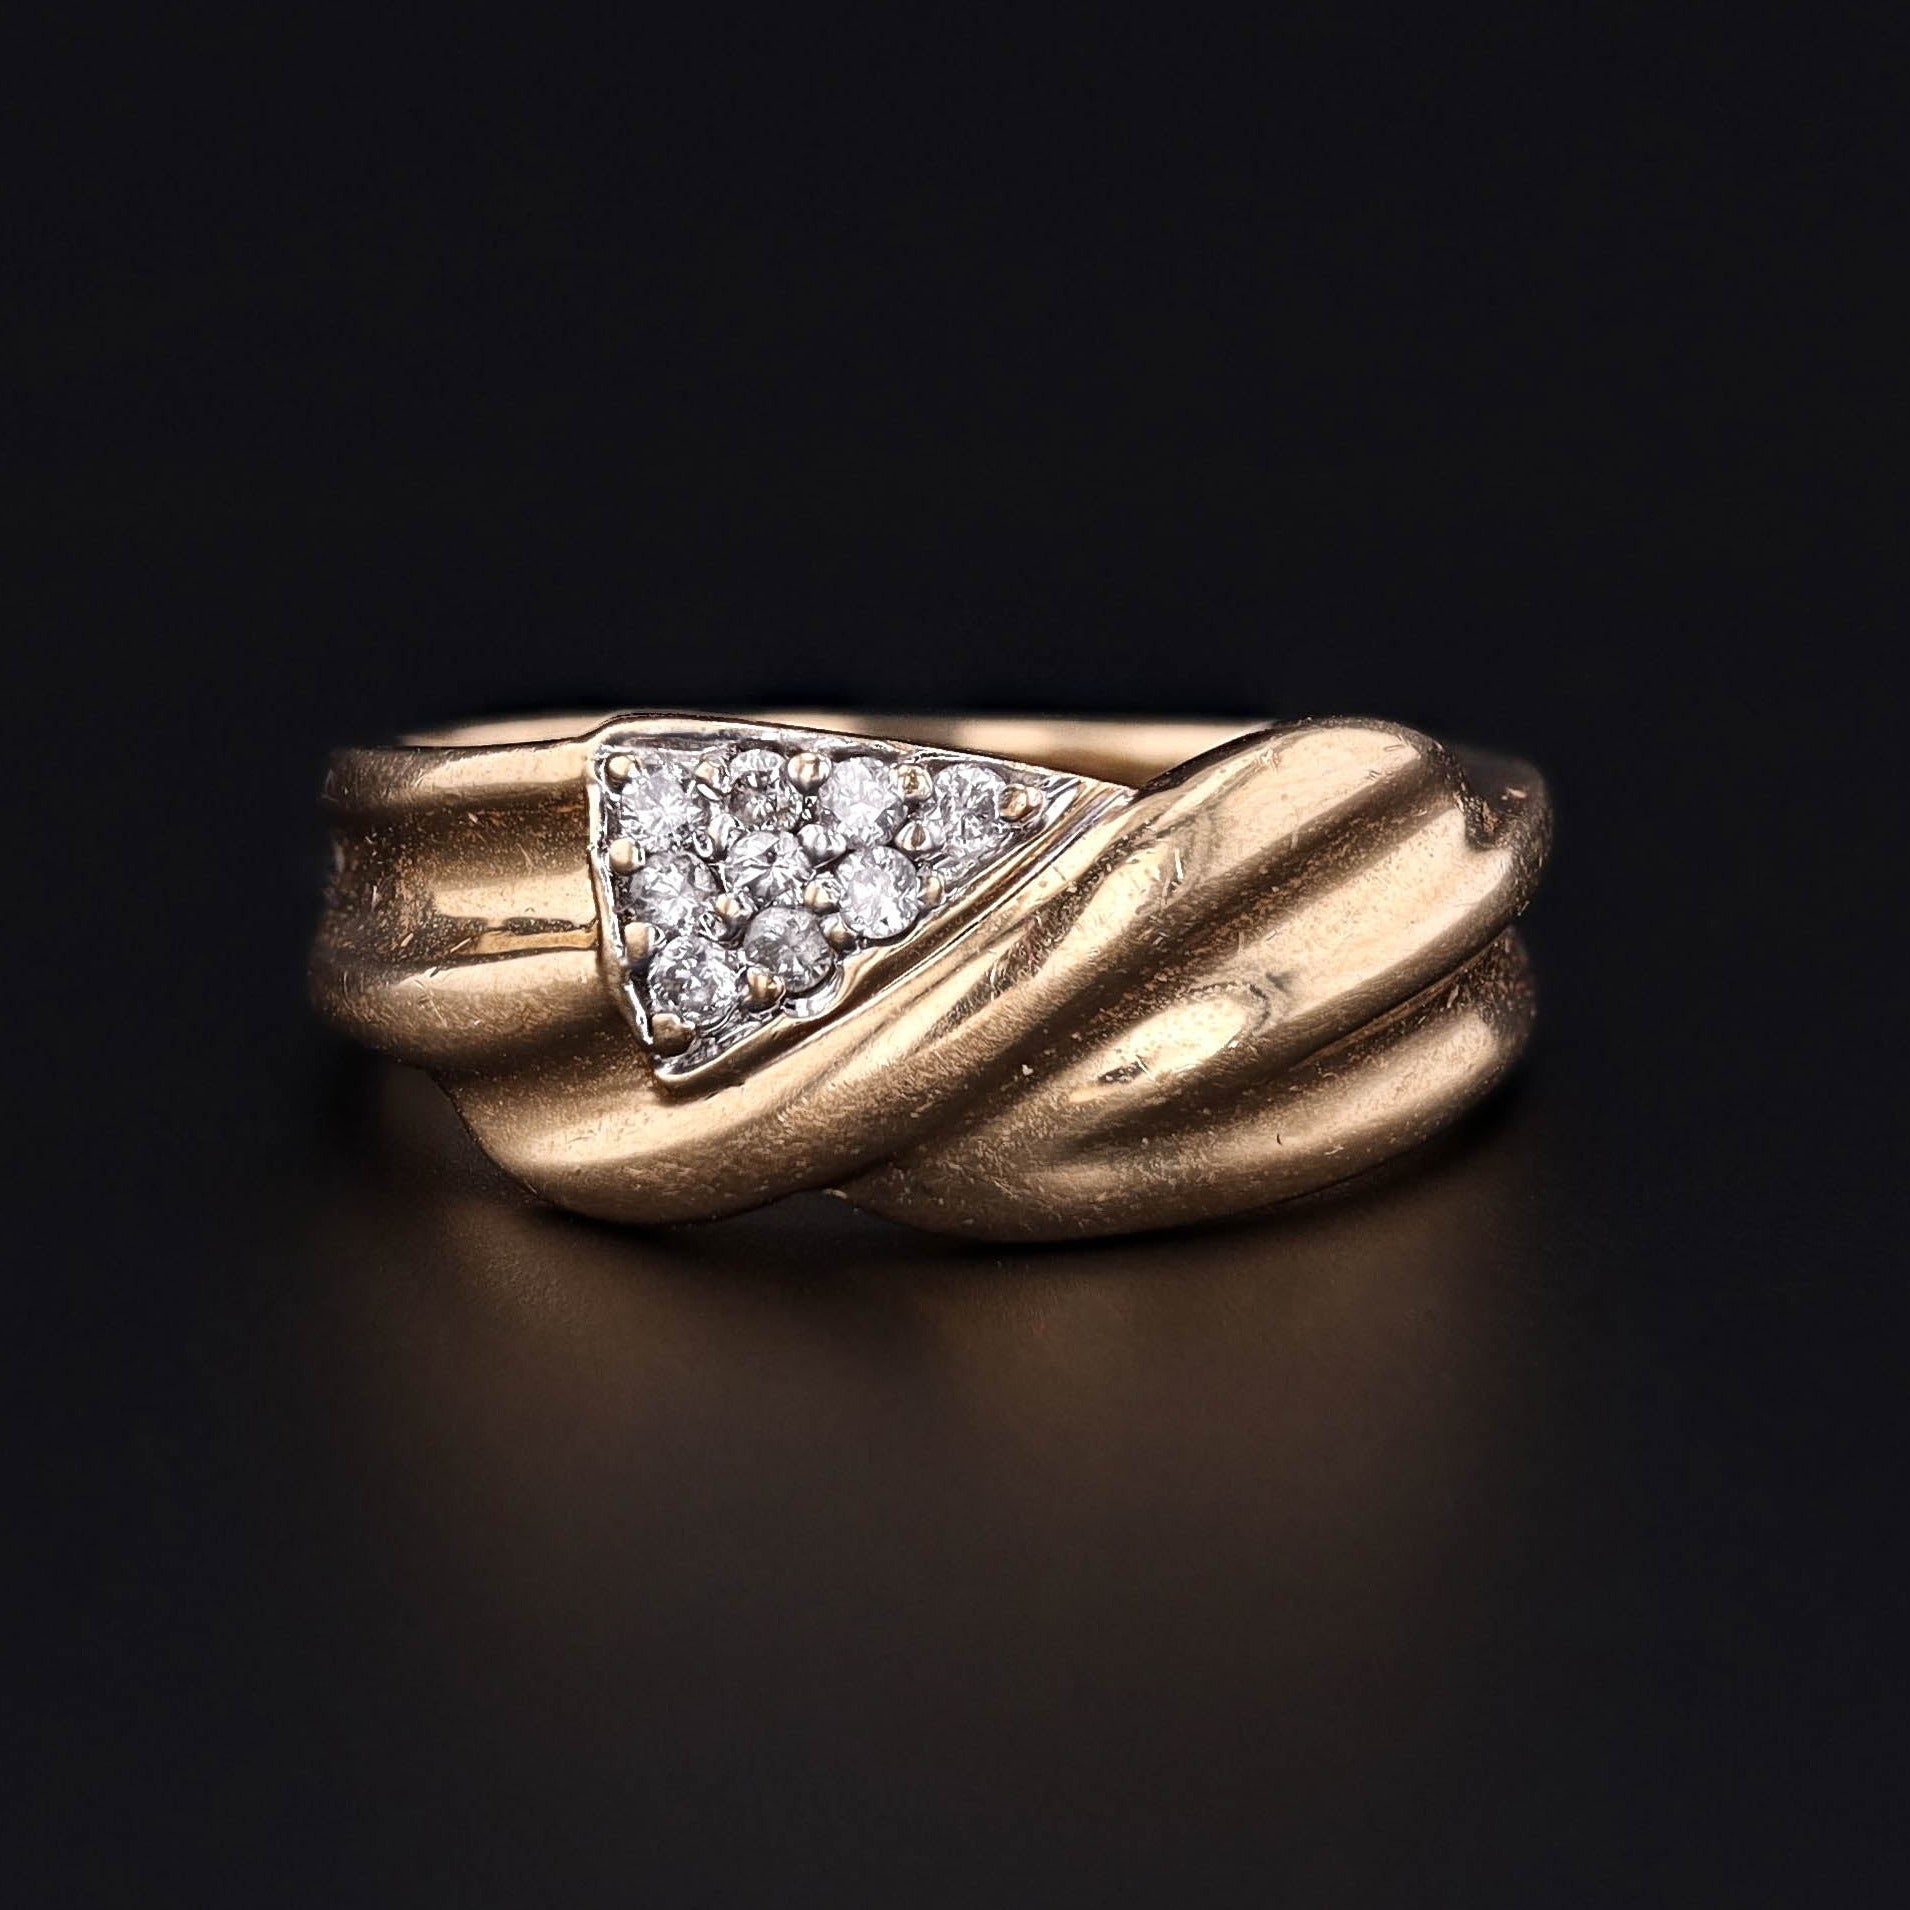 Vintage Diamond Band Ring of 14k Gold